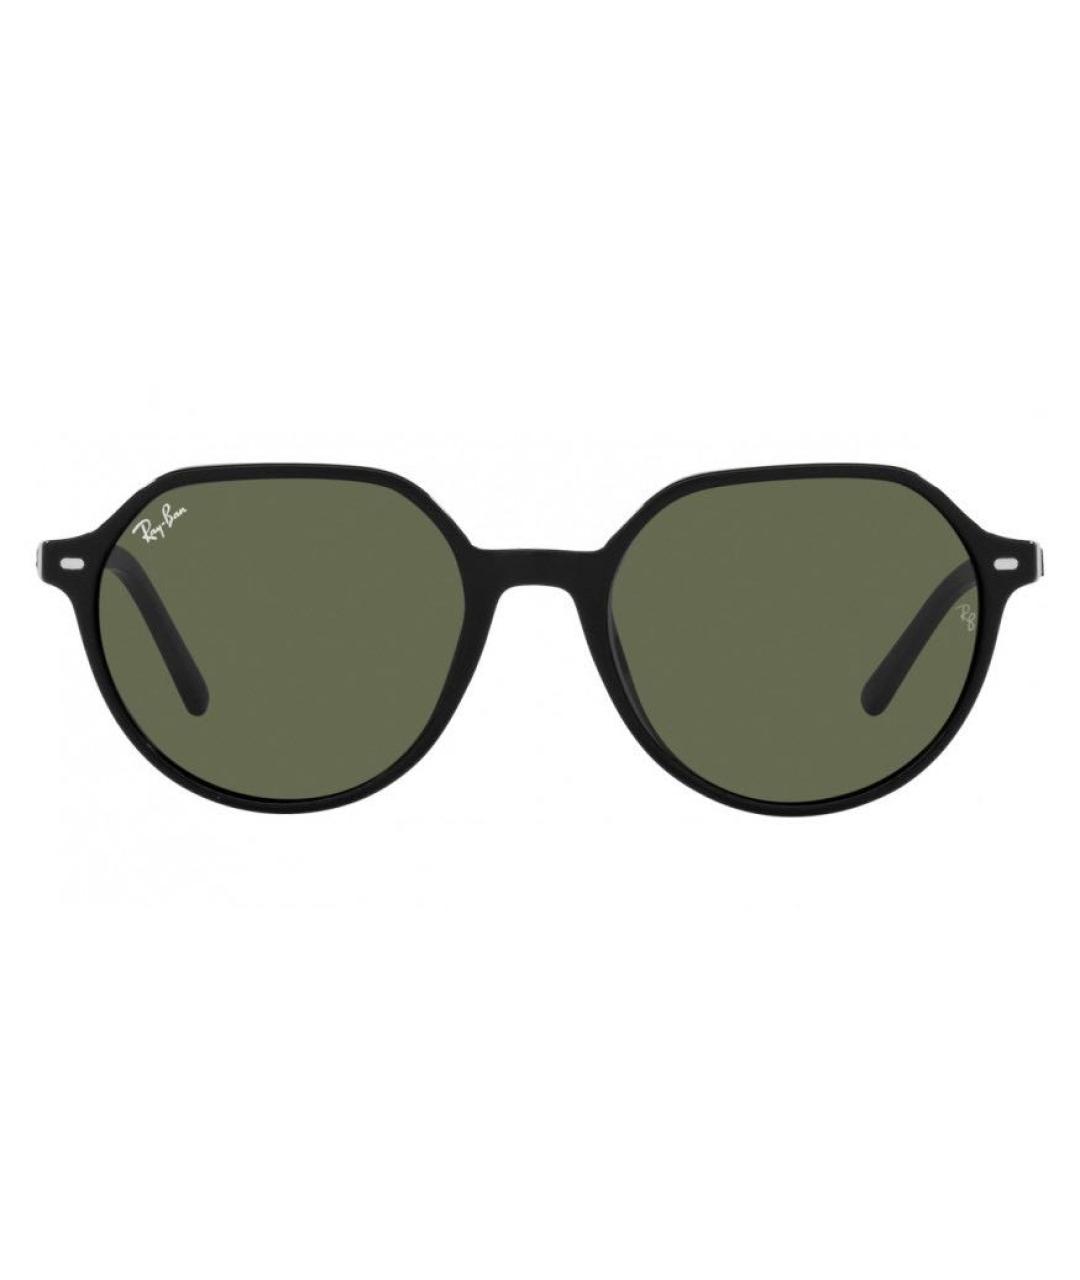 RAY BAN Пластиковые солнцезащитные очки, фото 1